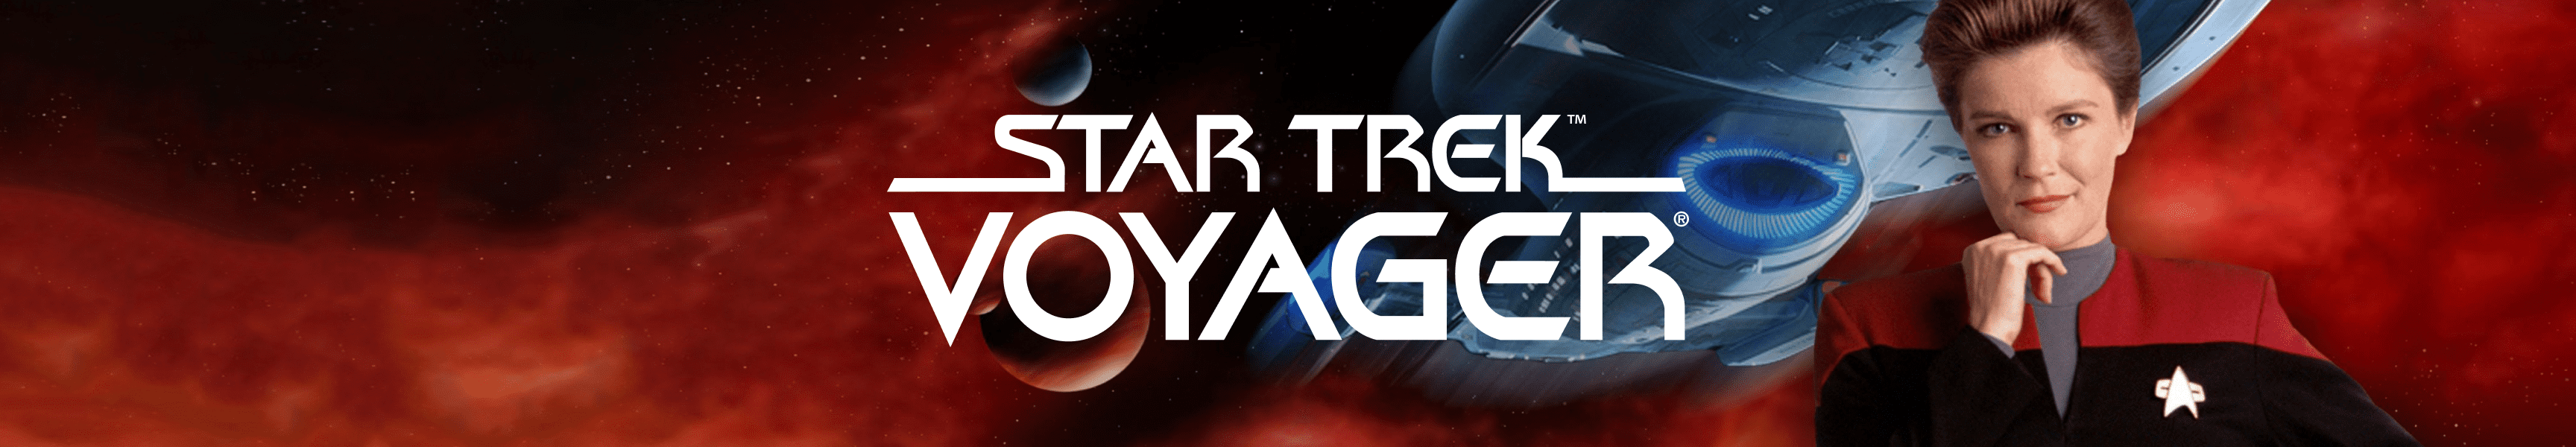 Star Trek Voyager 25